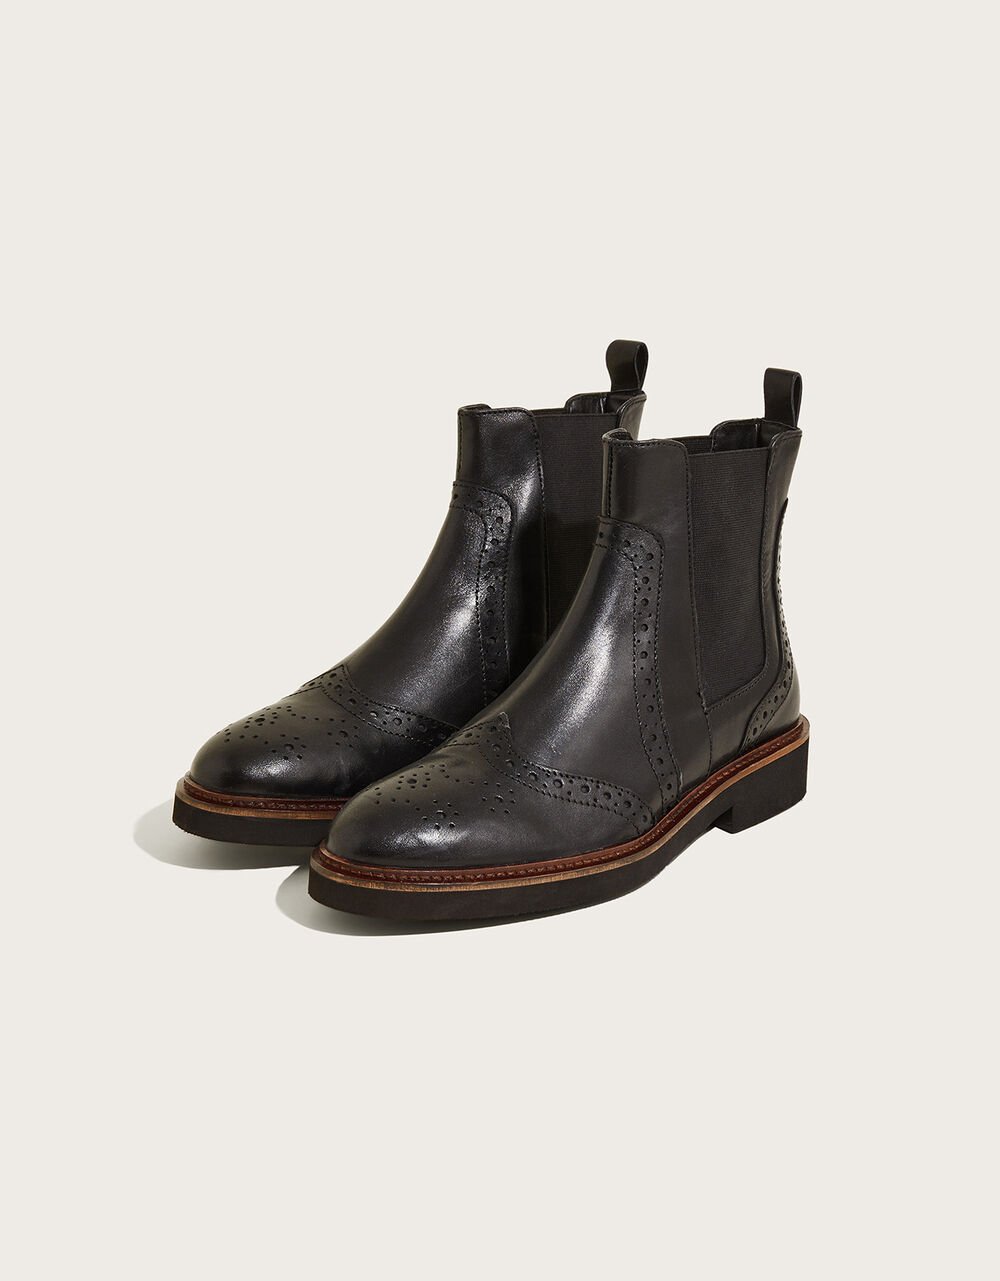 Sloane Brogue Leather Boots, Black (BLACK), large